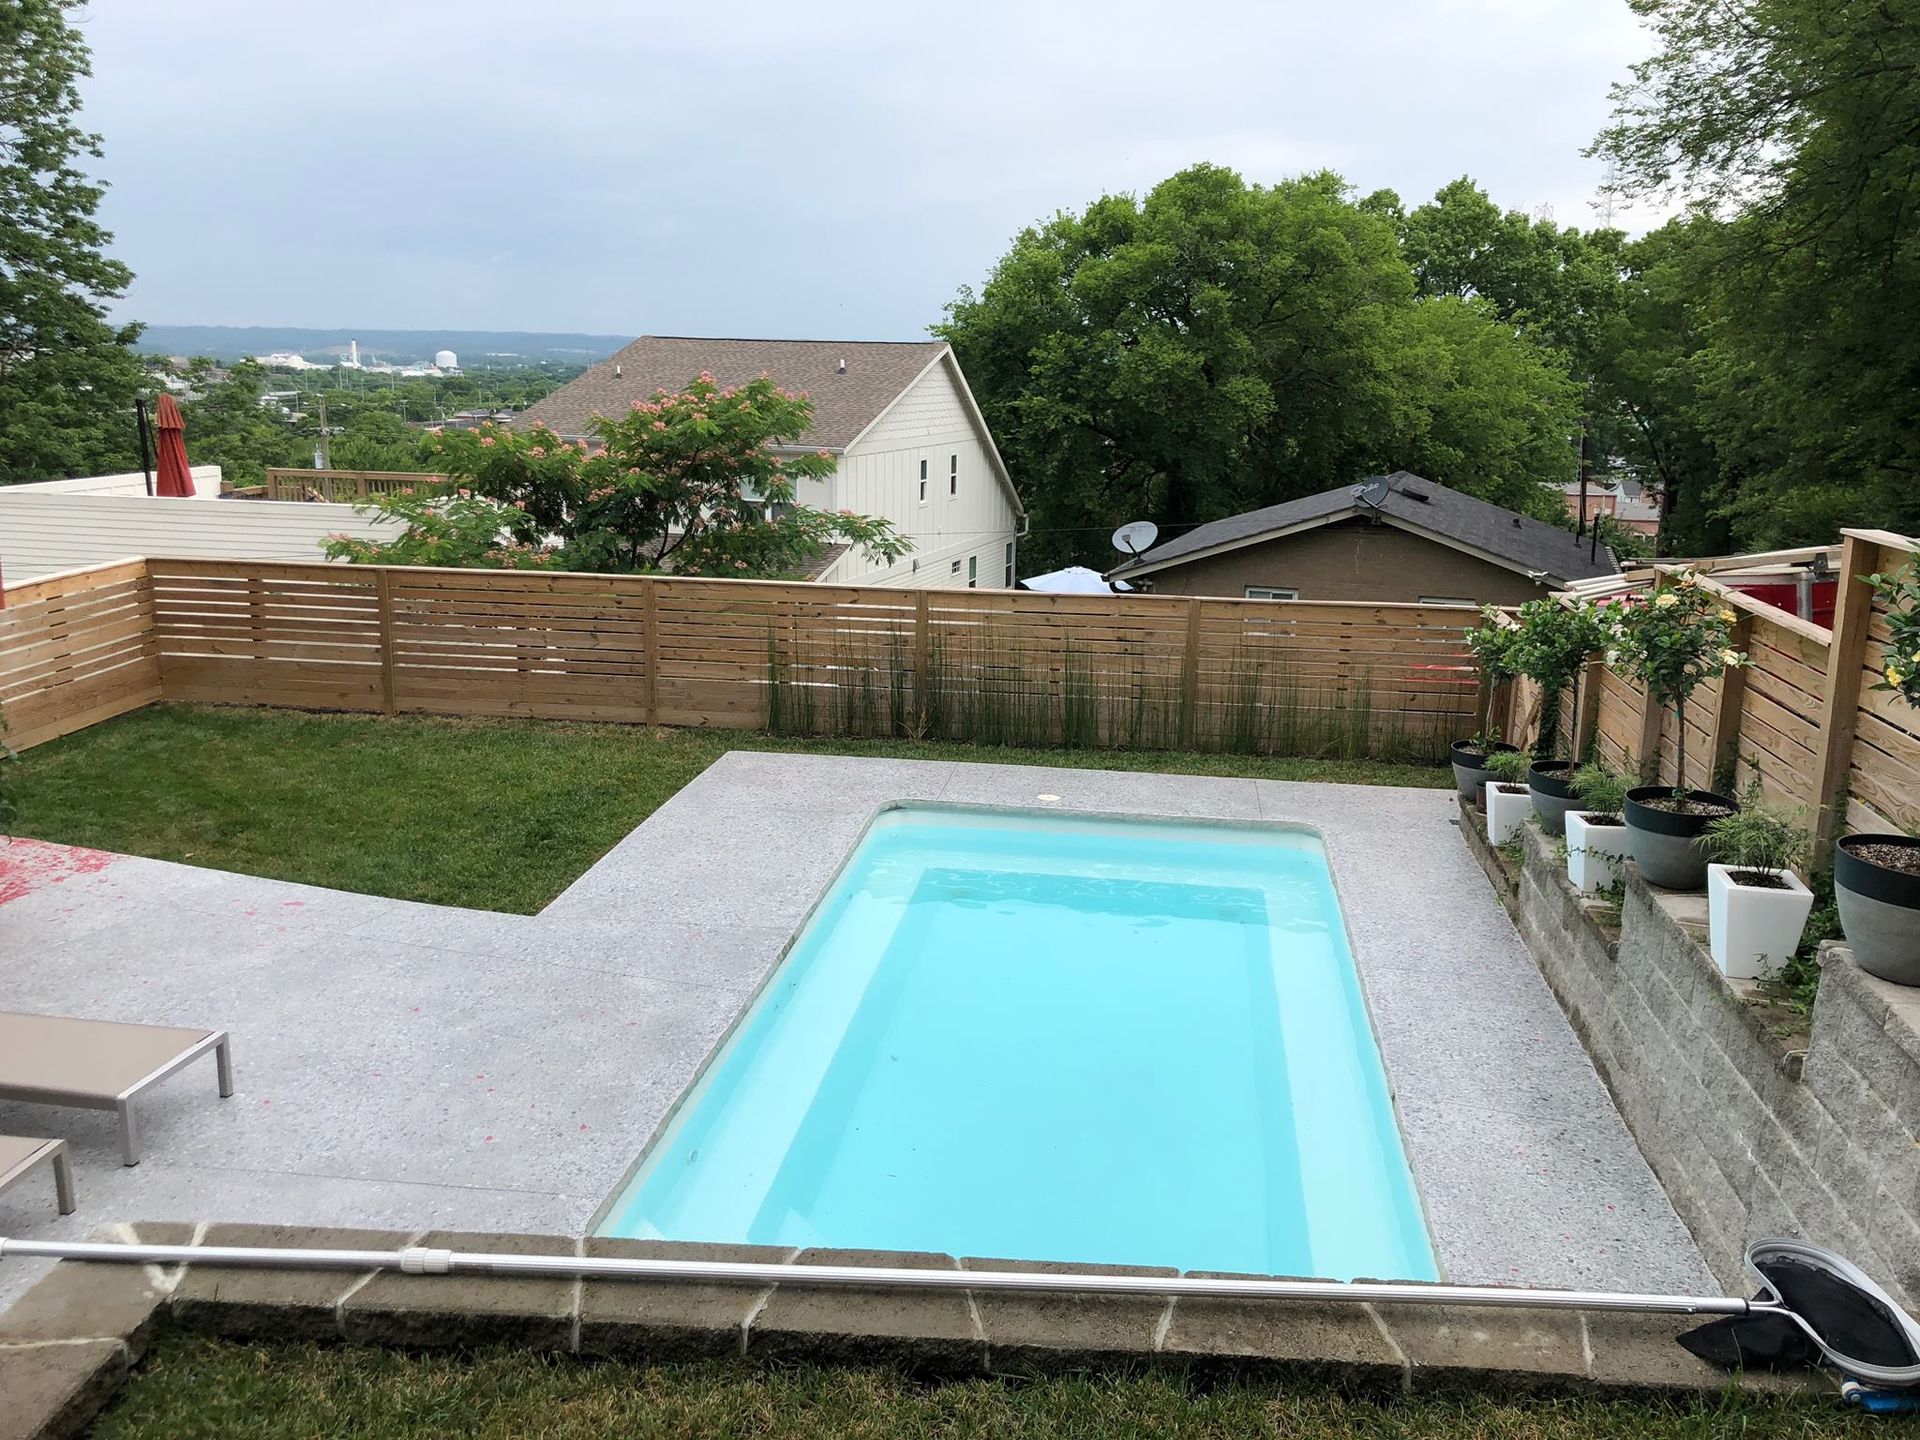 The Fun Pool —The Brooklyn Fiberglass Pool Model, TN